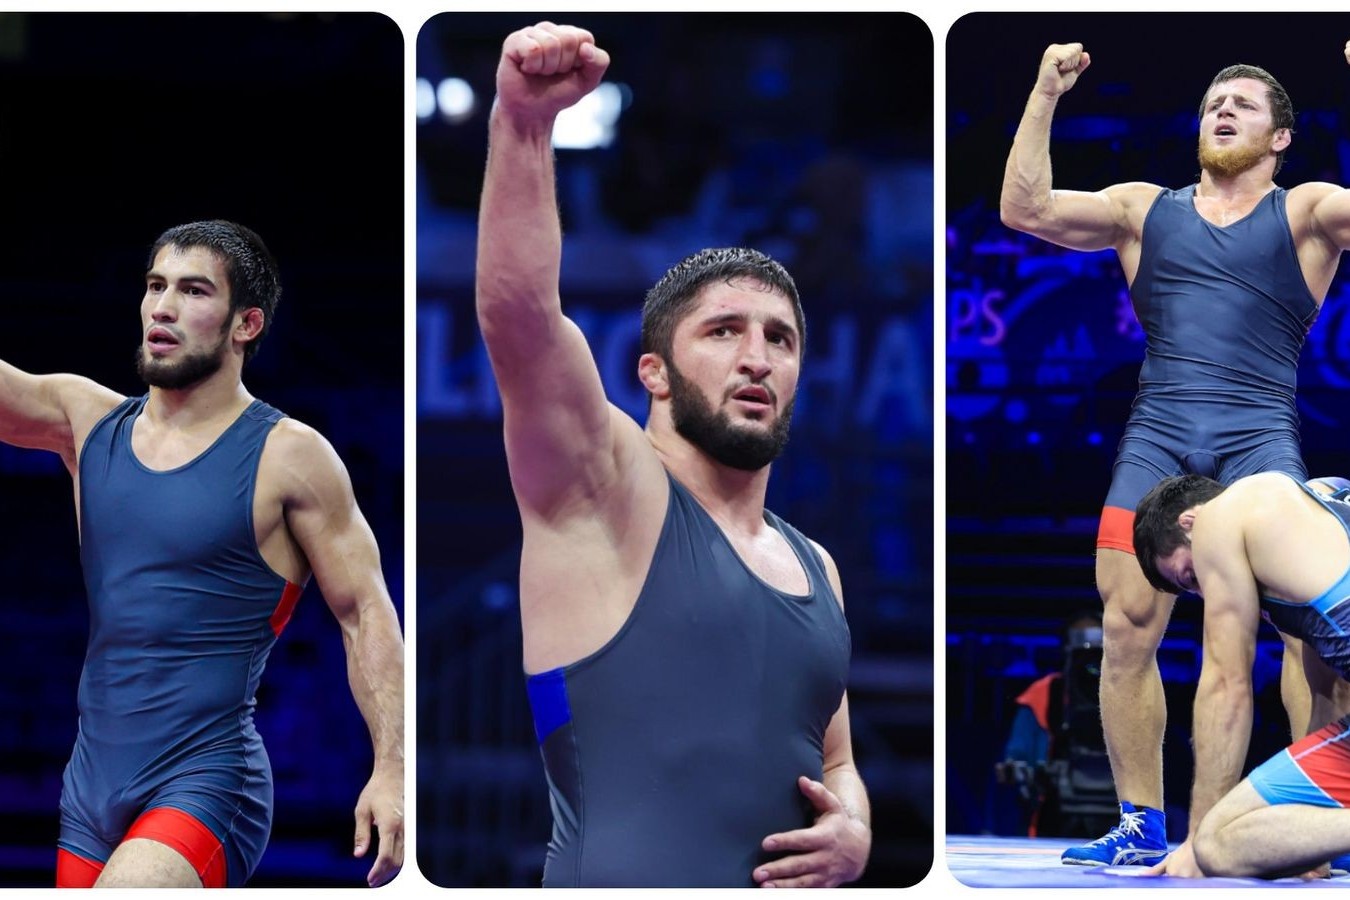 Russians are cautious of Azerbaijani wrestlers